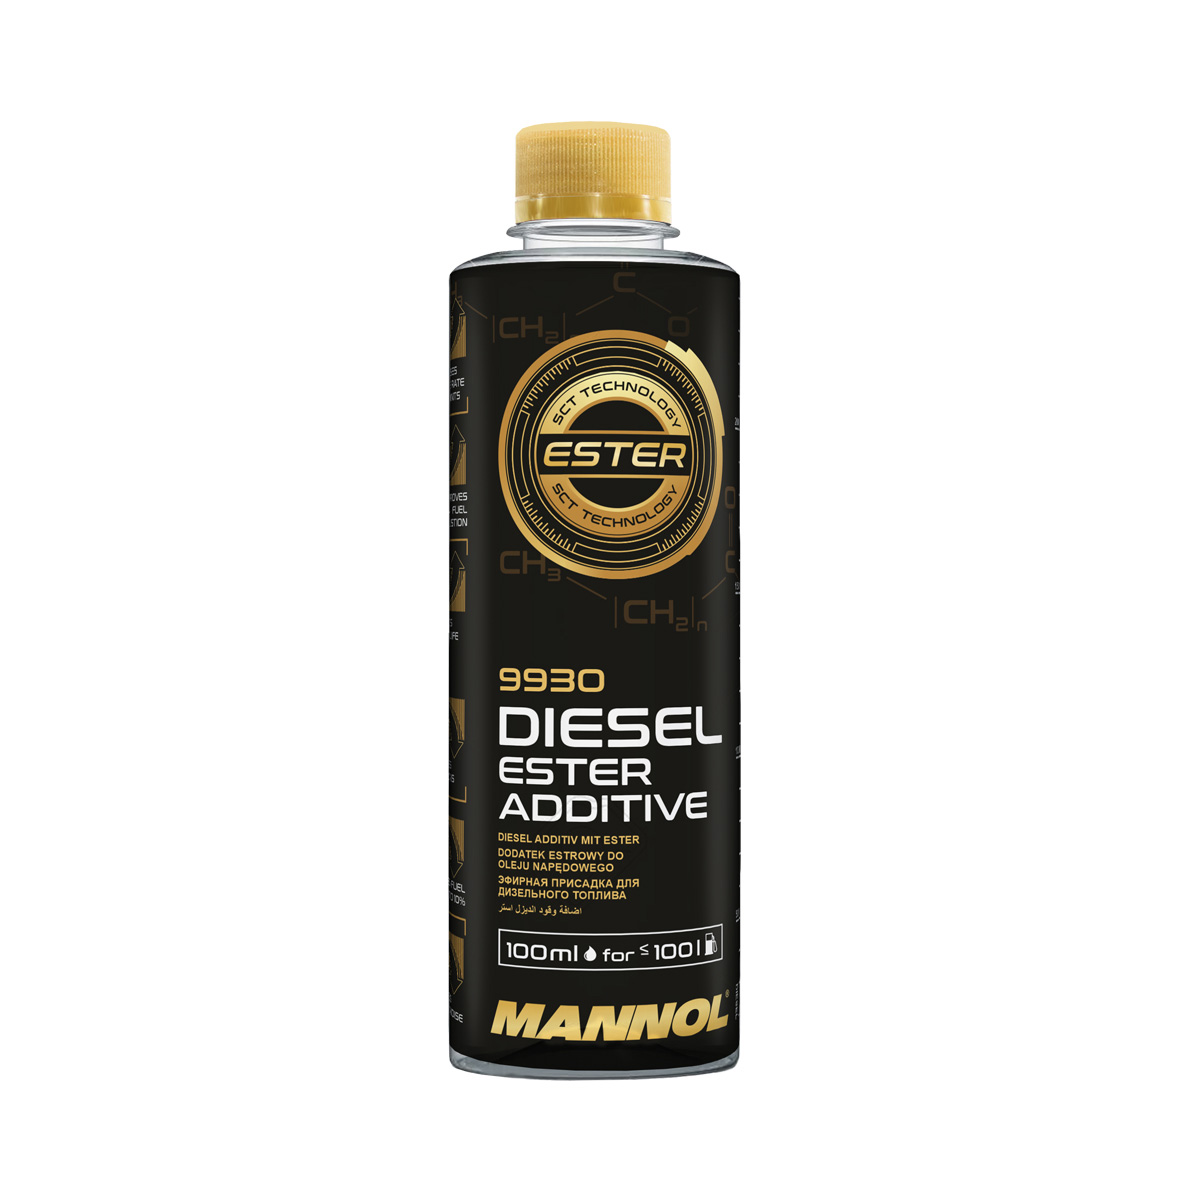 MANNOL Diesel Ester Additive